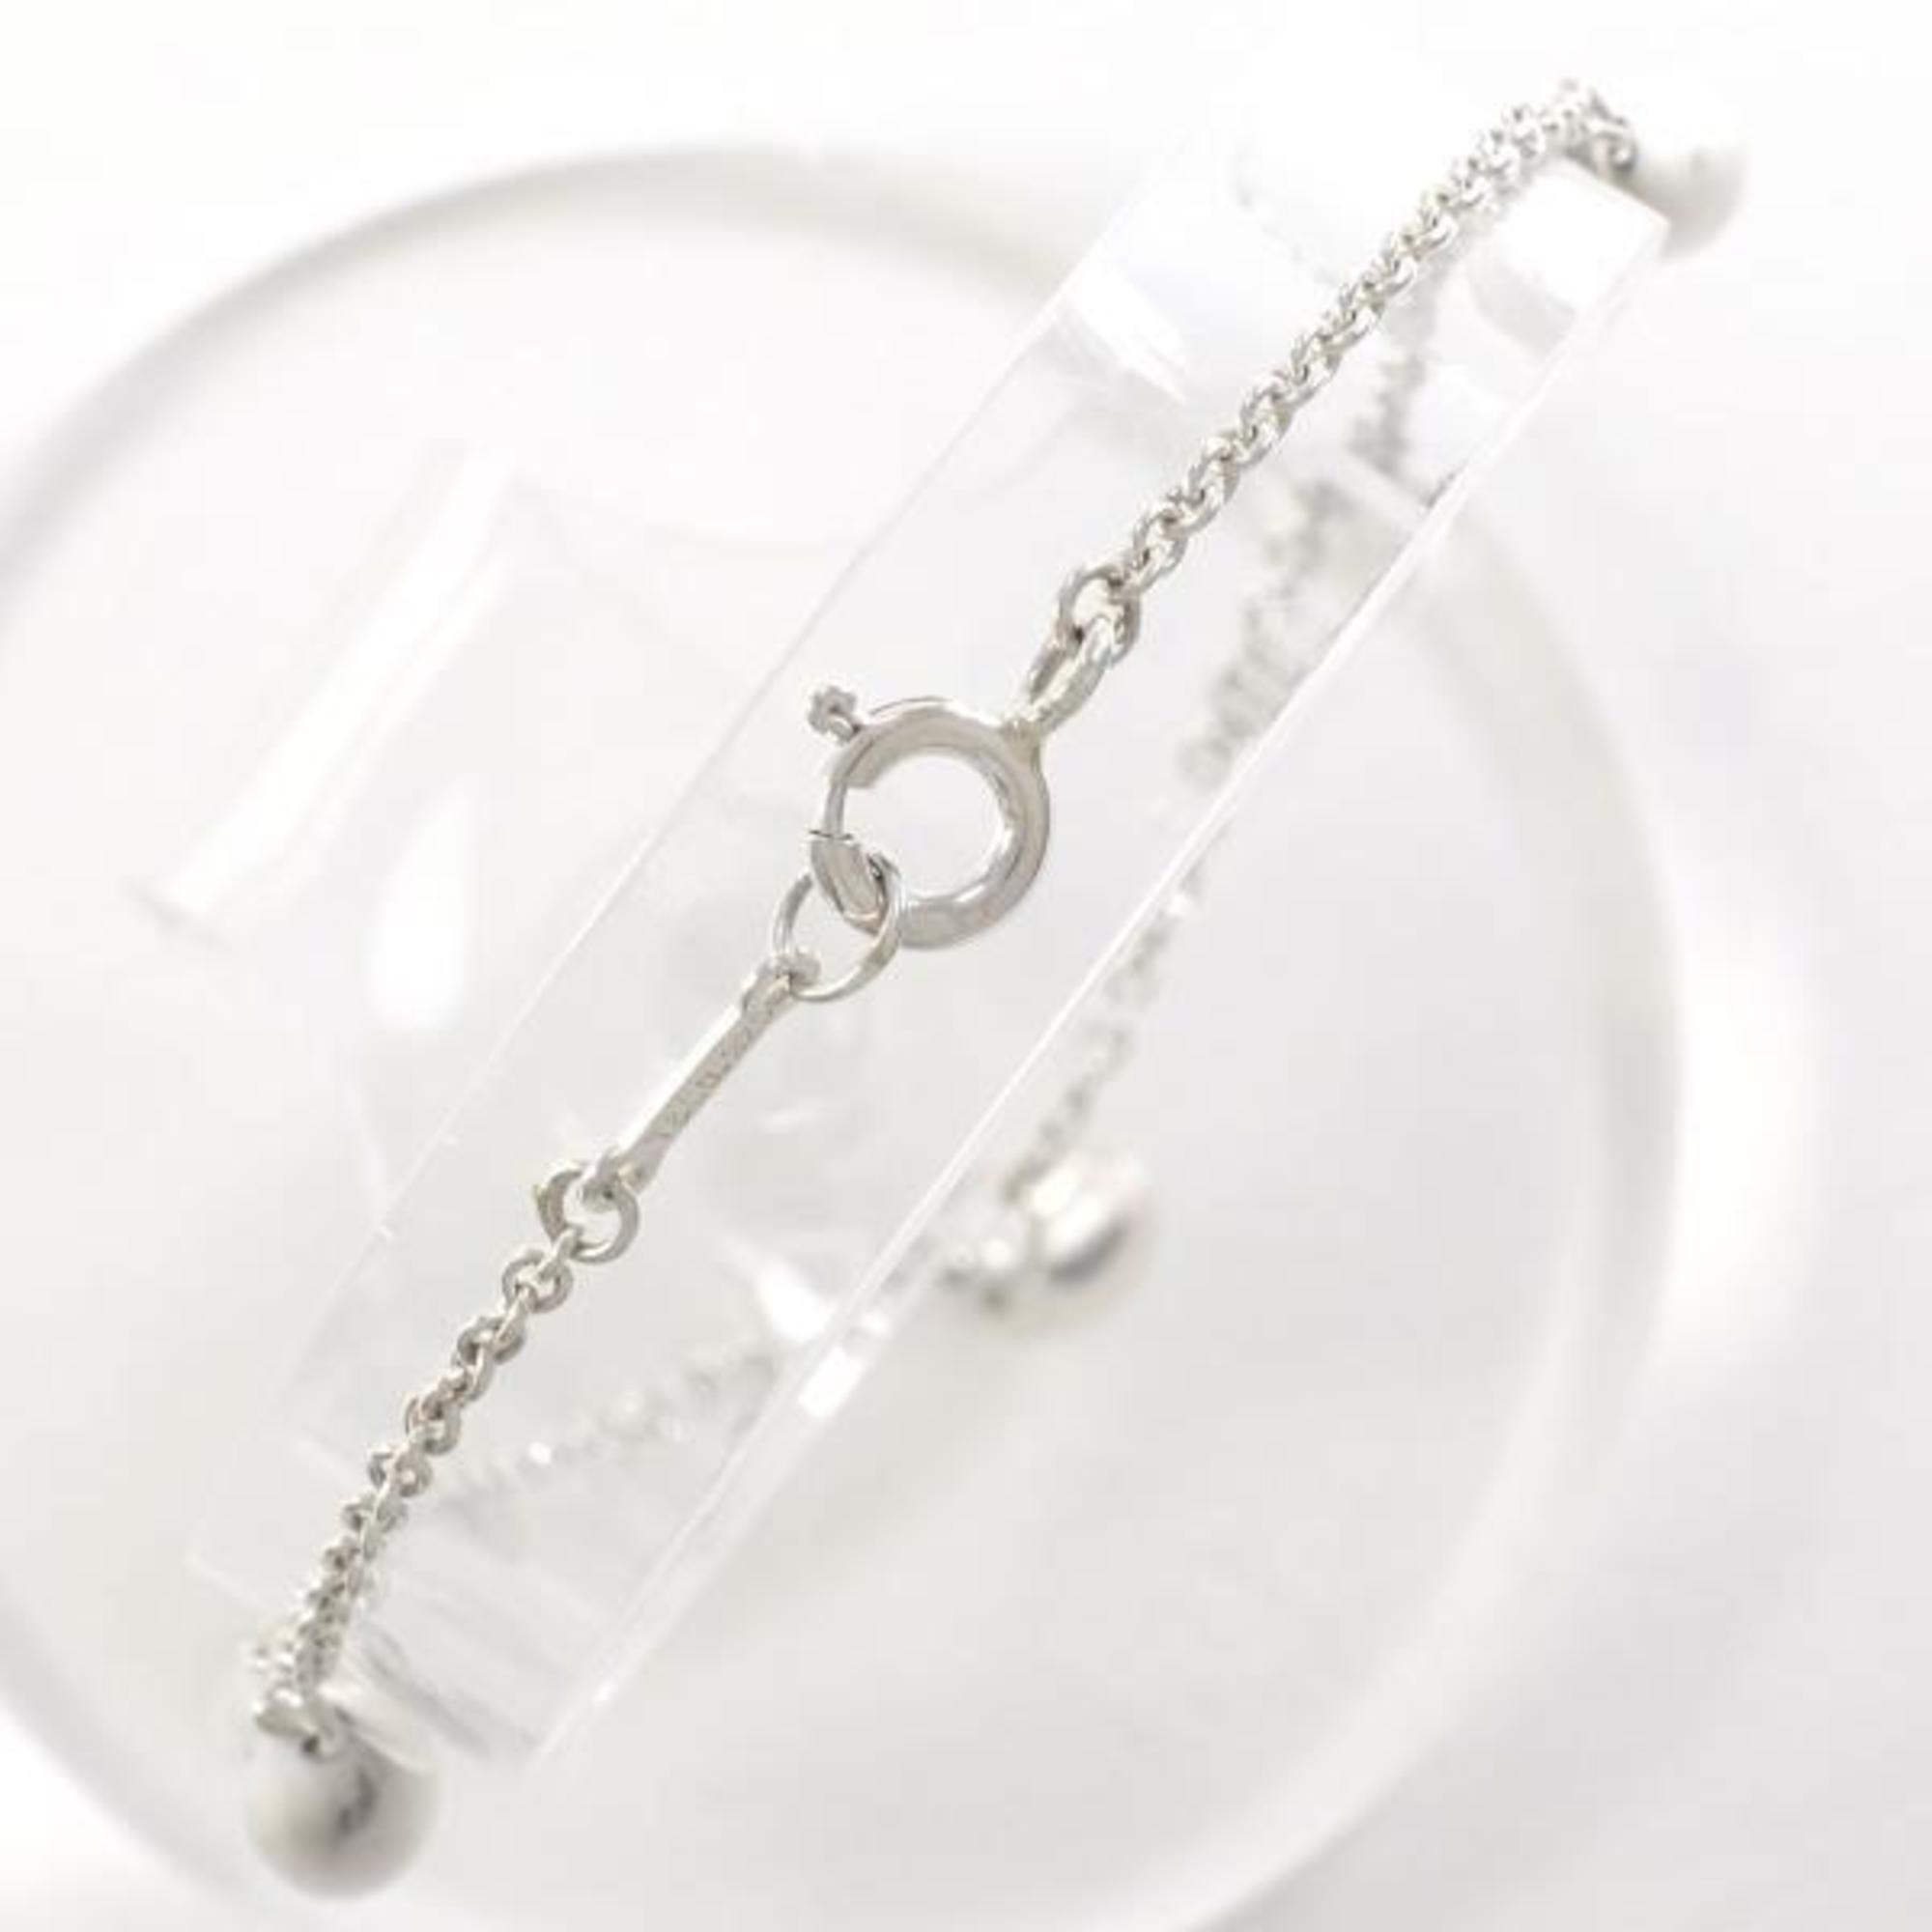 Tiffany Teardrop Silver Bracelet Total Weight Approximately 5.8g 17cm Jewelry